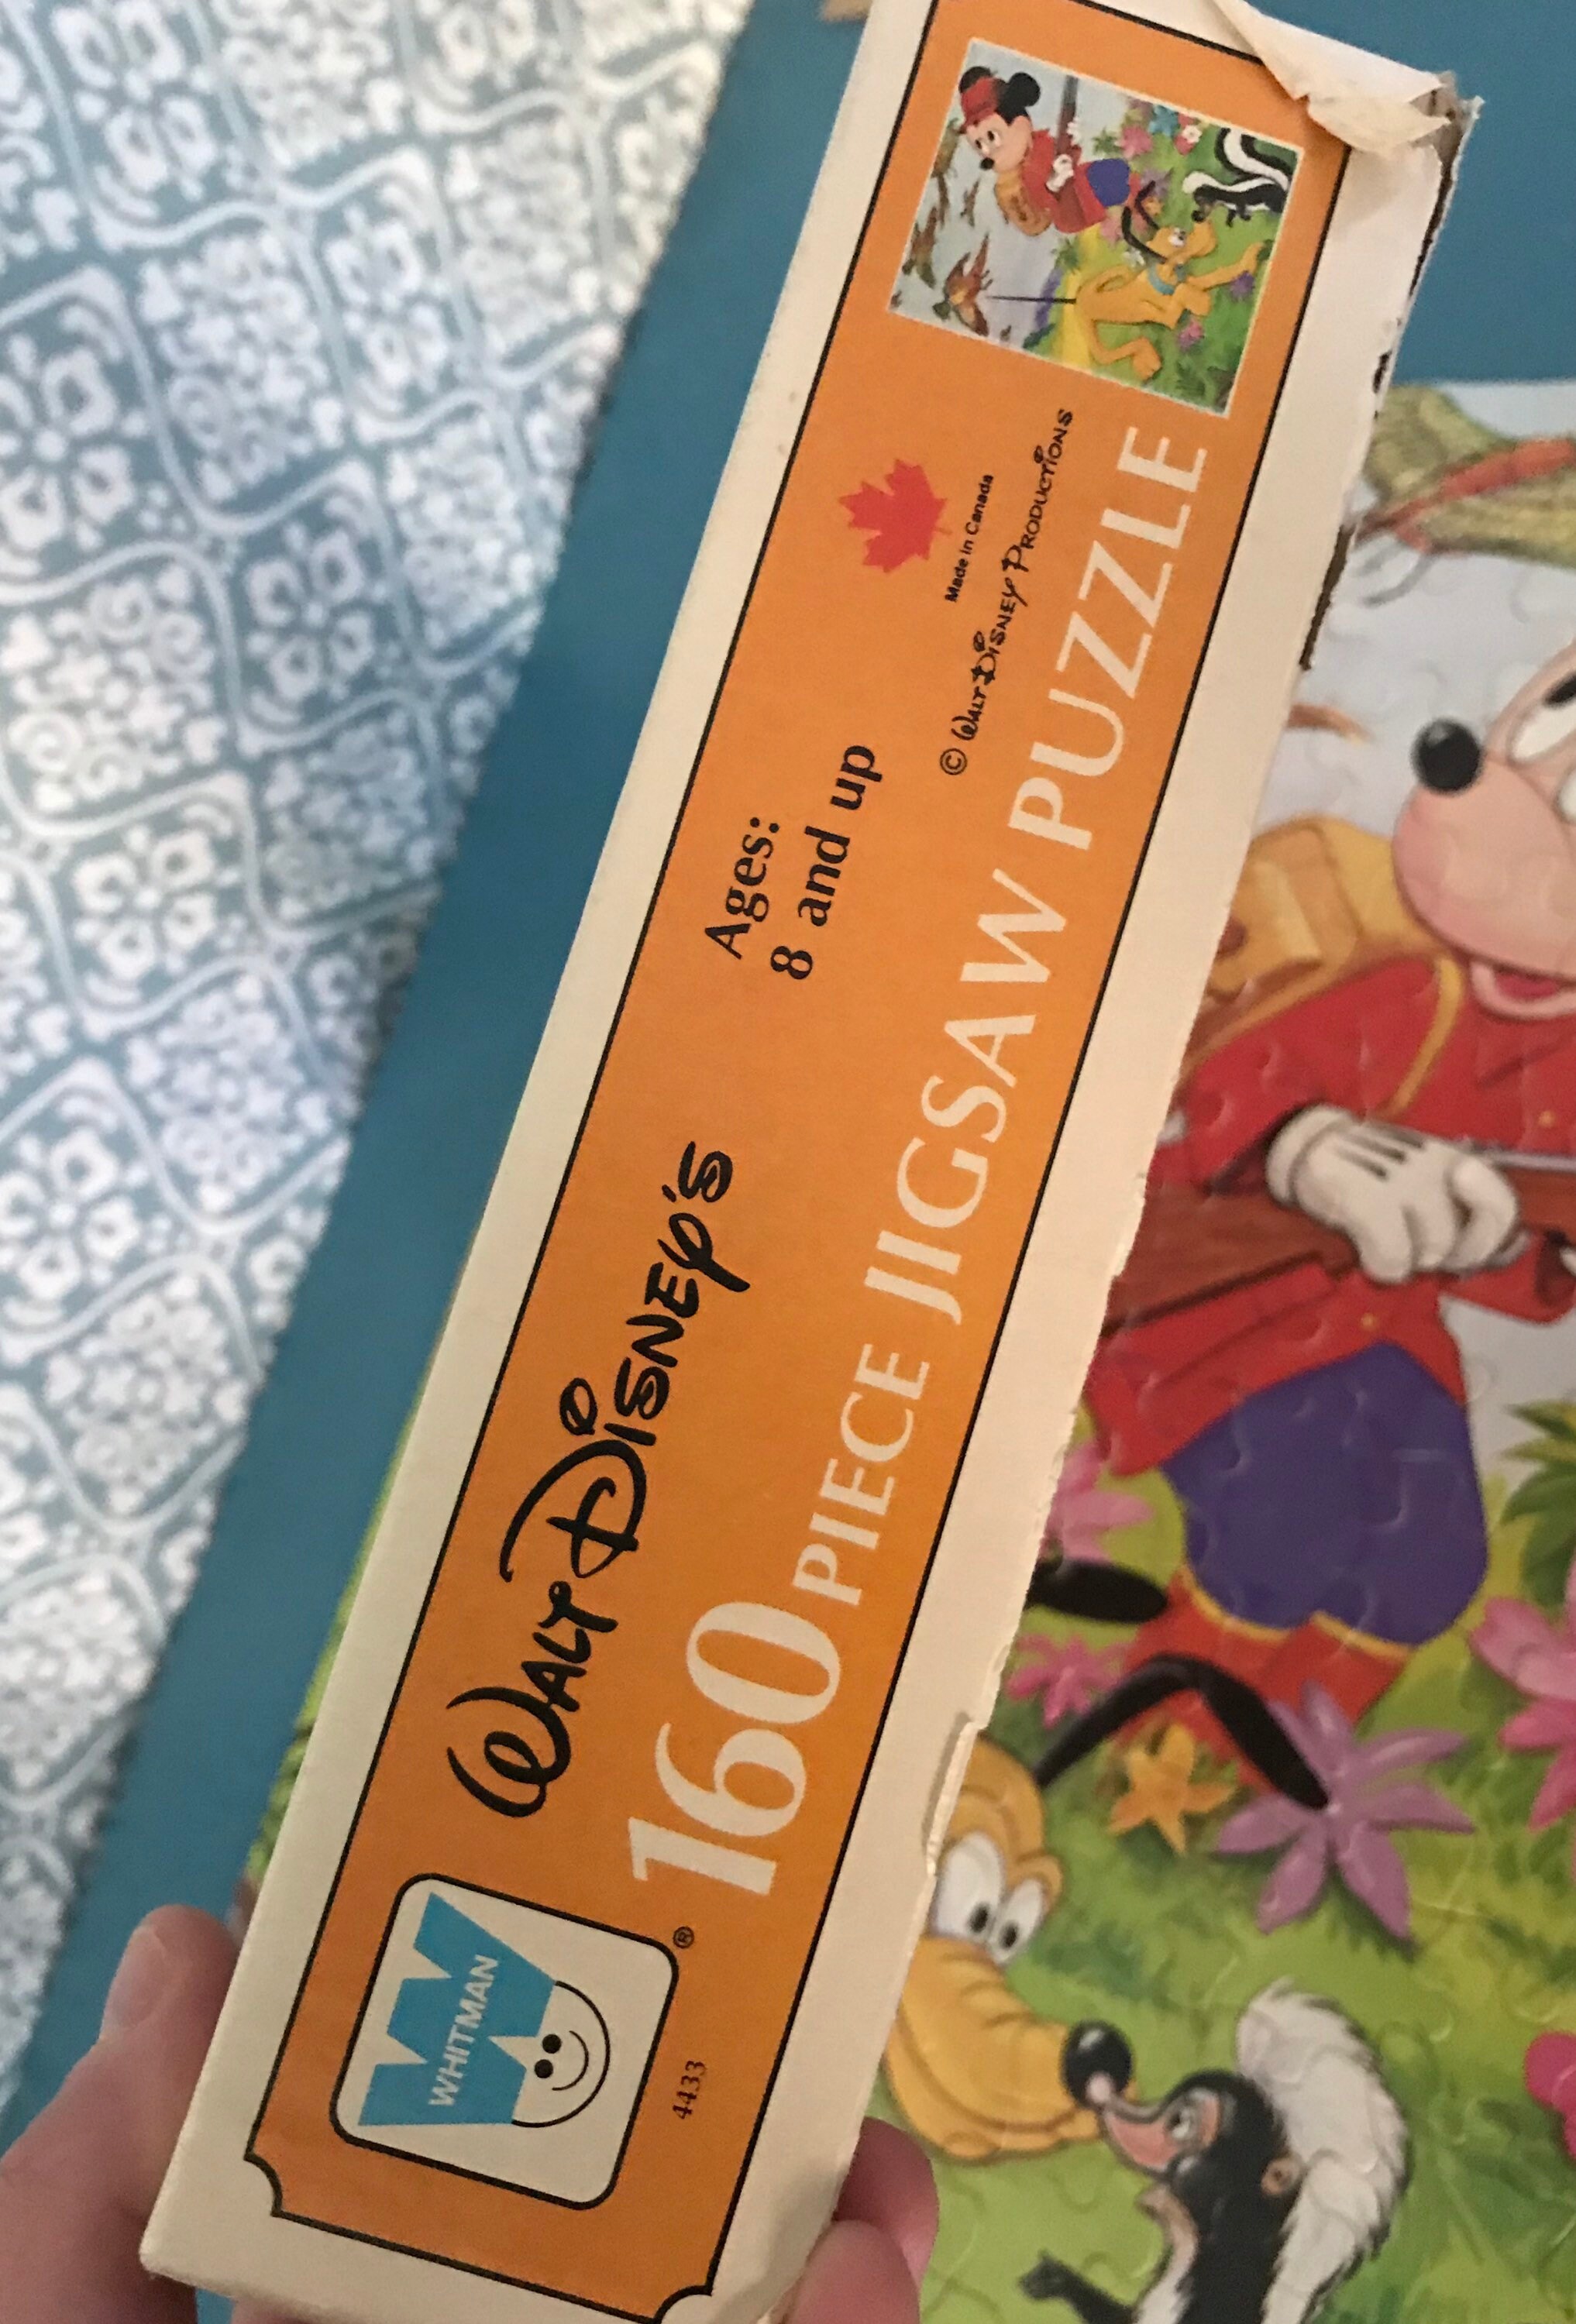 Disney Mickey Mouse Retro Wood Puzzle 160 pc